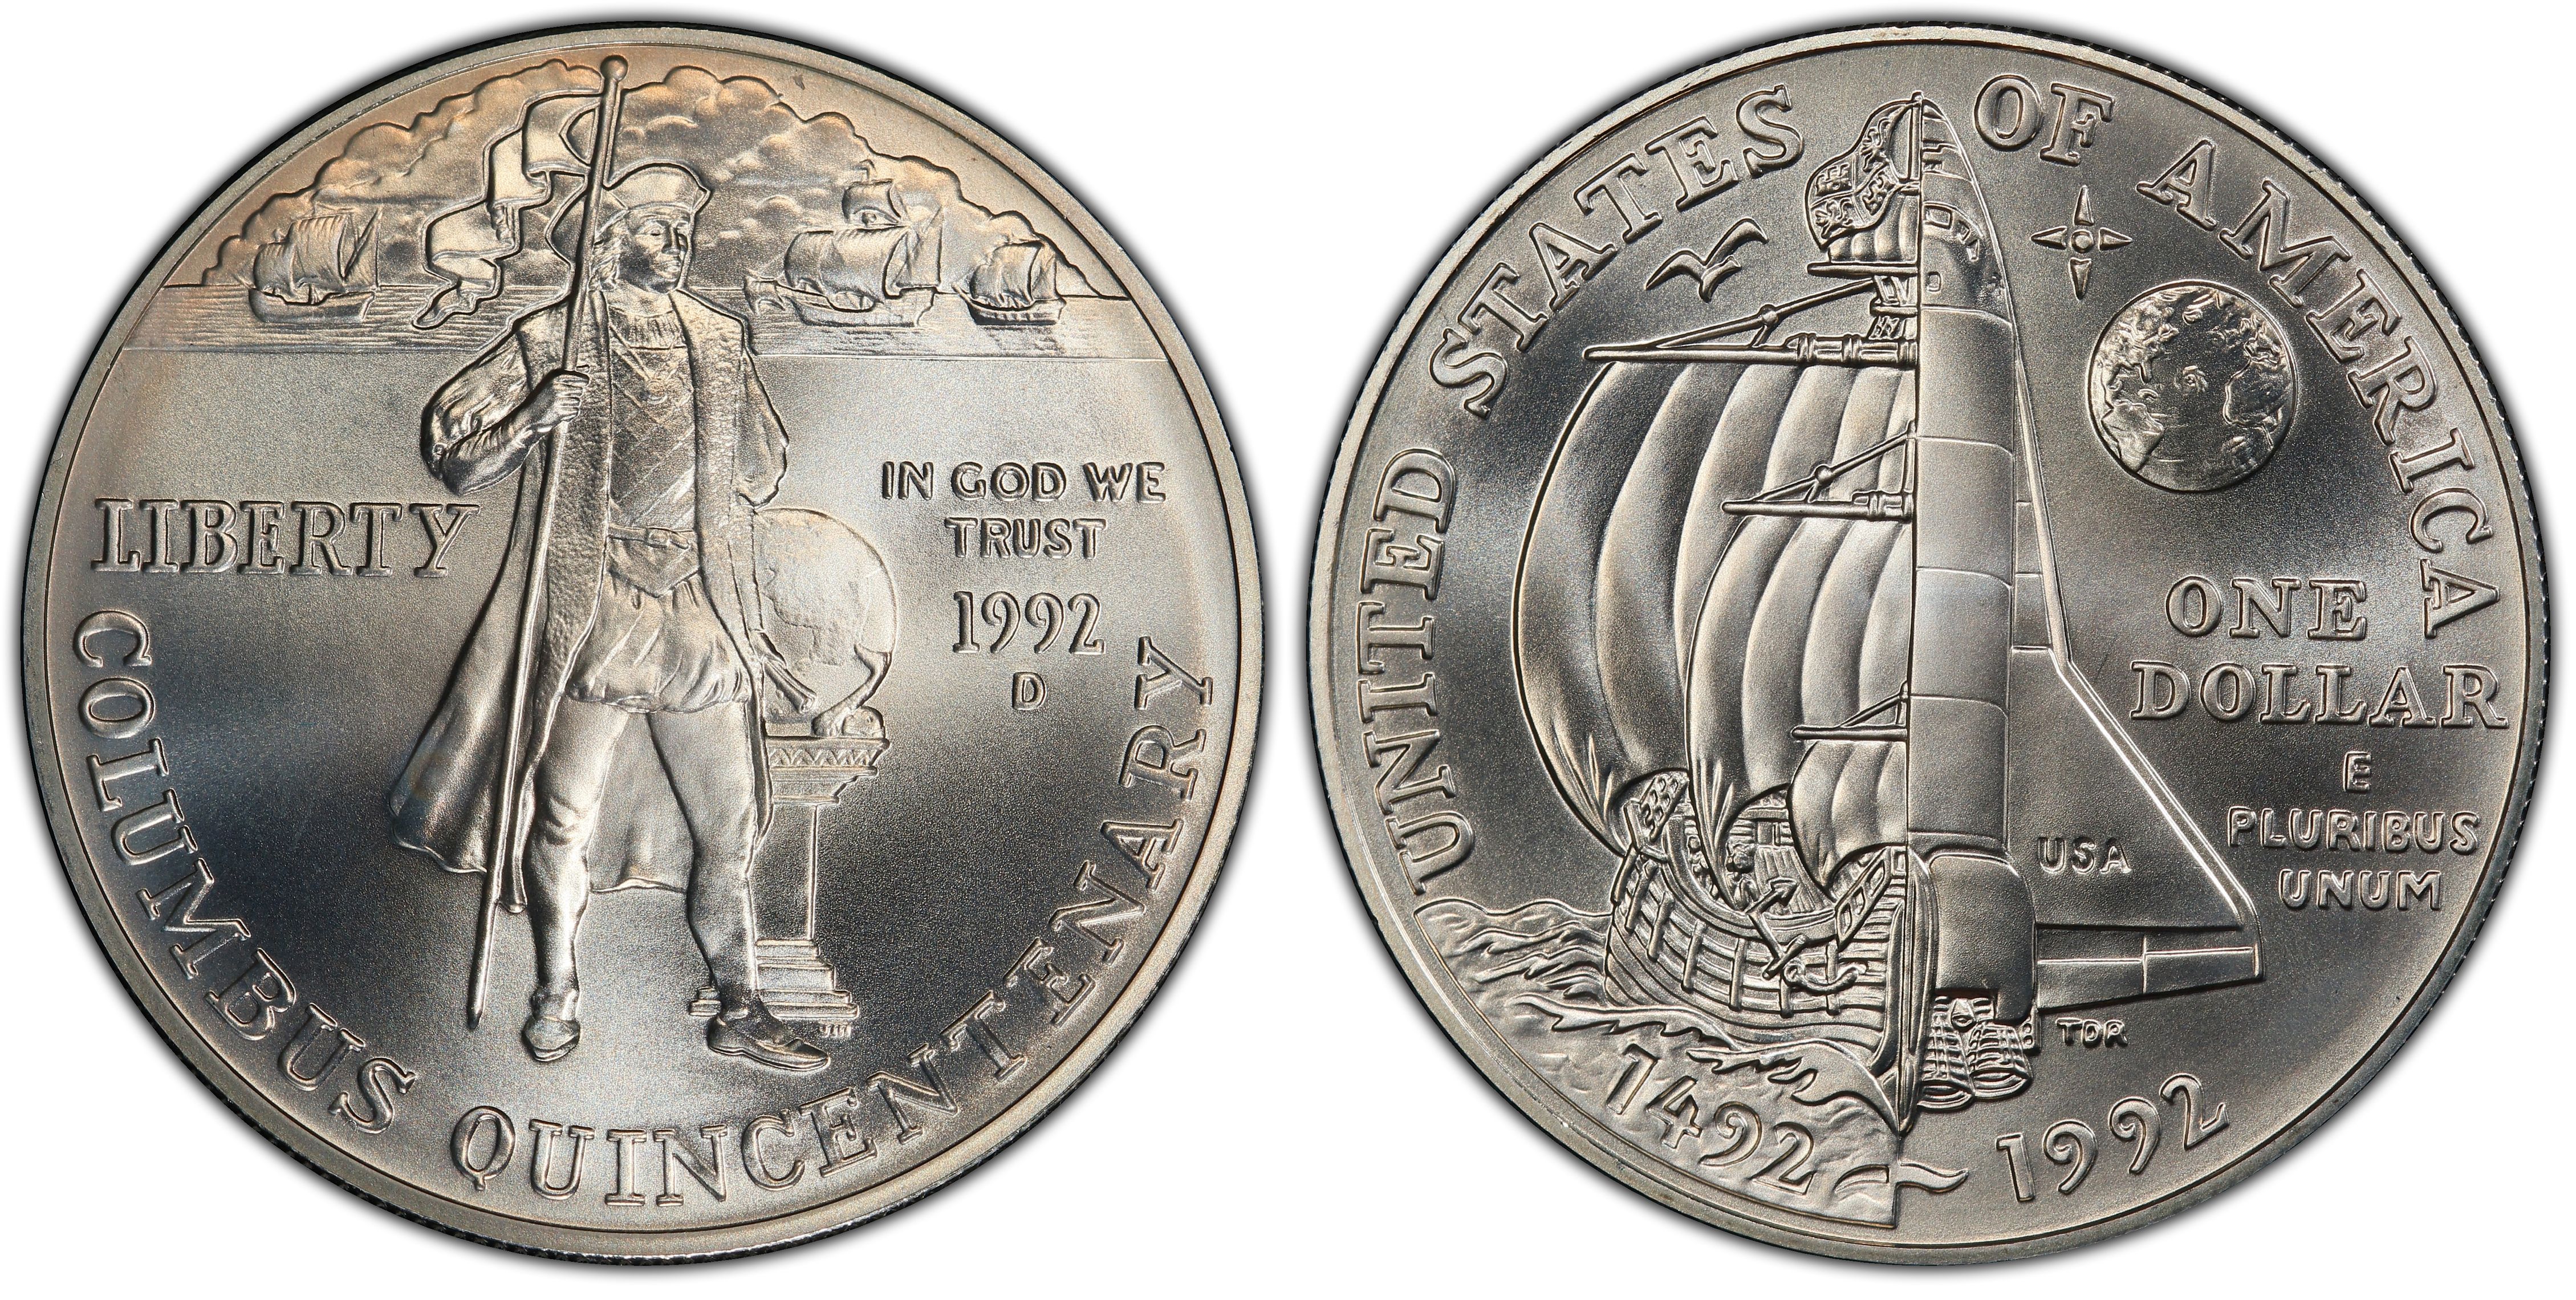 1992 D Columbus Uncirculated BU Silver Dollar Commemorative $1 Unc Coin 